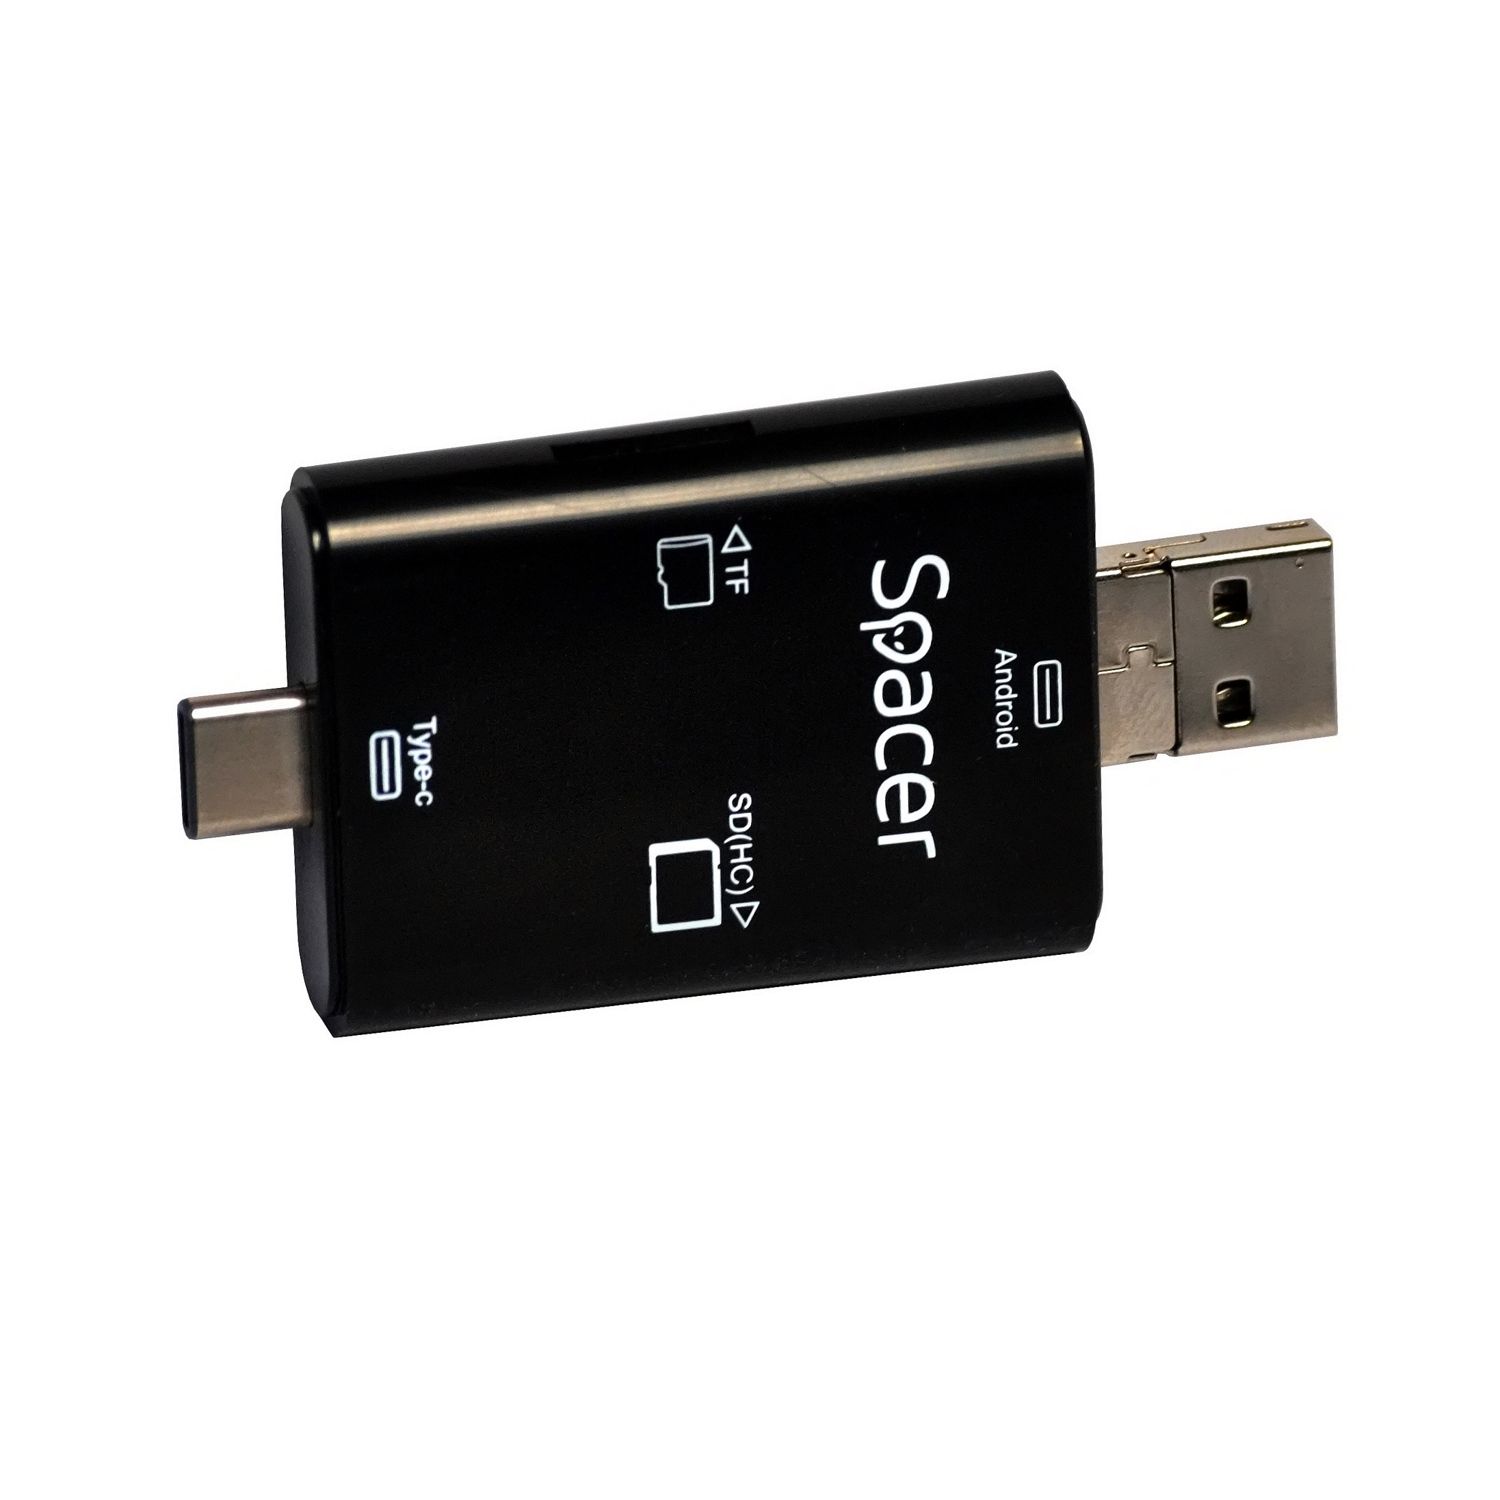 CARD READER extern SPACER, 3 in 1, interfata USB 2.0, USB Type C, Micro-USB, citeste/scrie: SD, micro SD; adaptor USB Type C la USB sau Micro-USB; plastic, negru, 